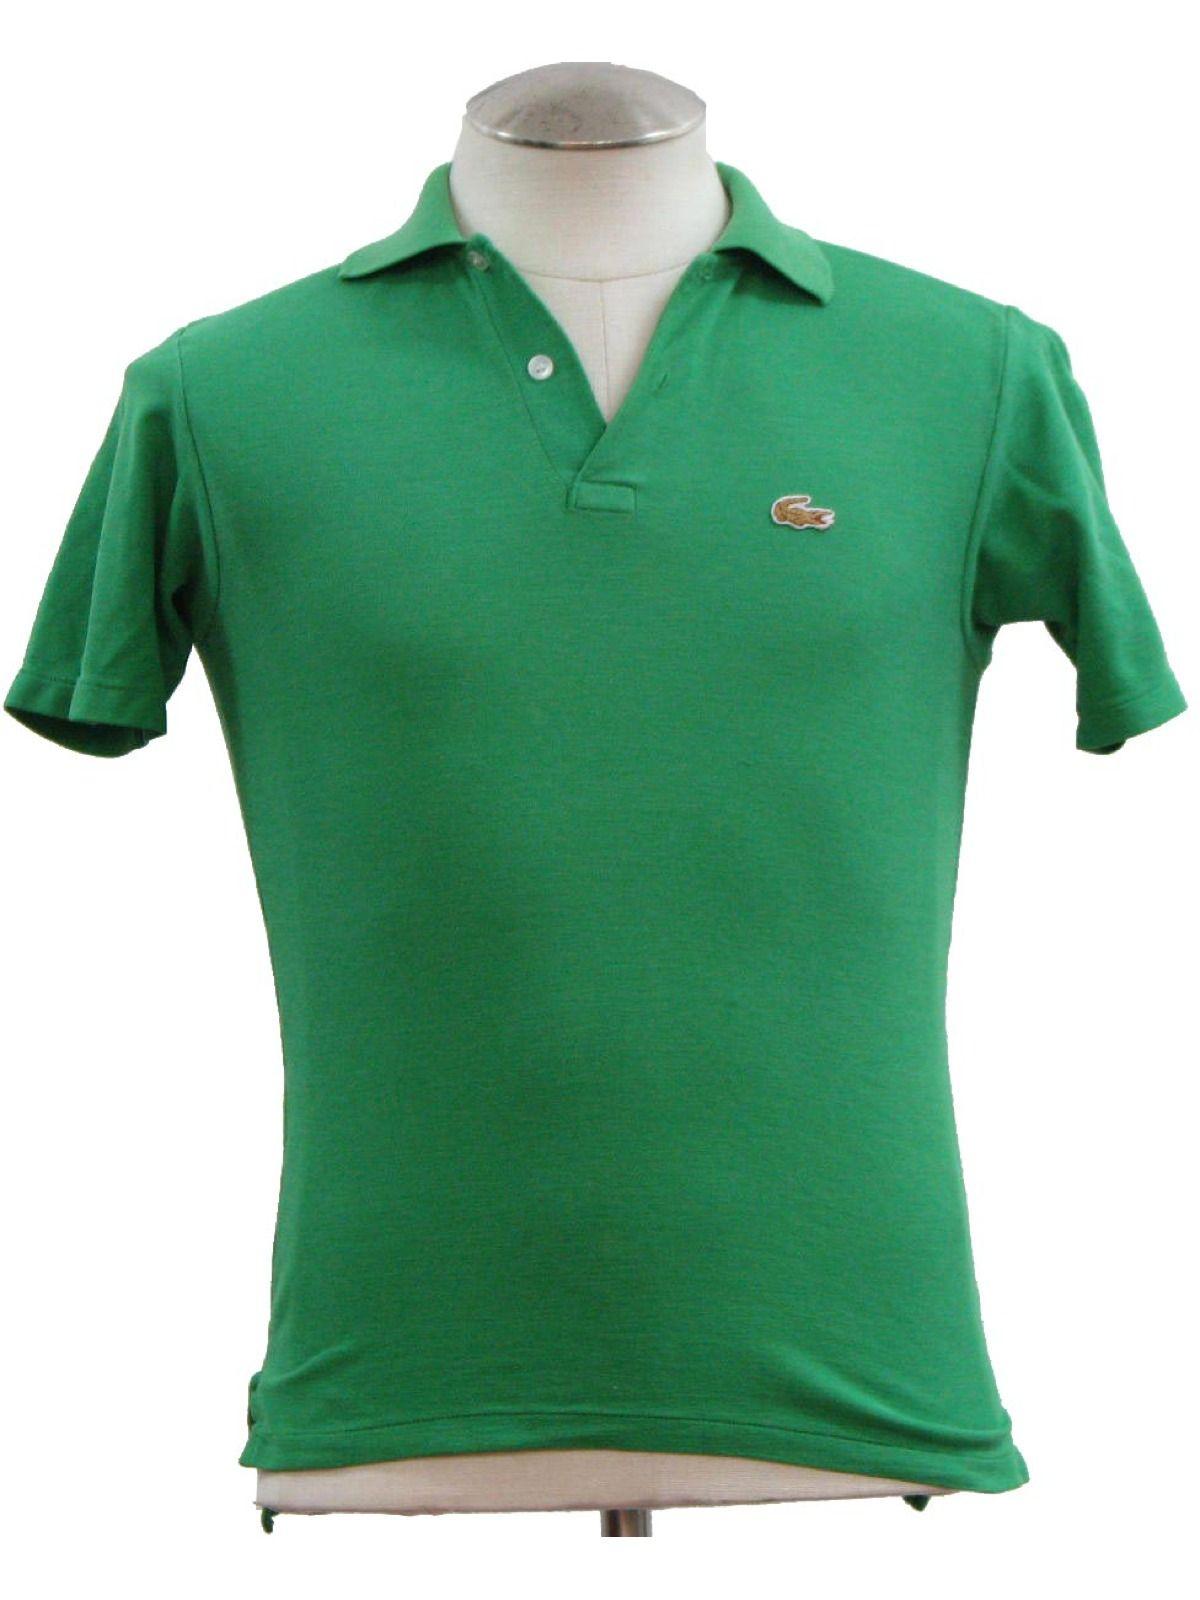 1980s Izod Logo - Eighties Izod Shirt: 80s -Izod- Mens or boys green woven cotton